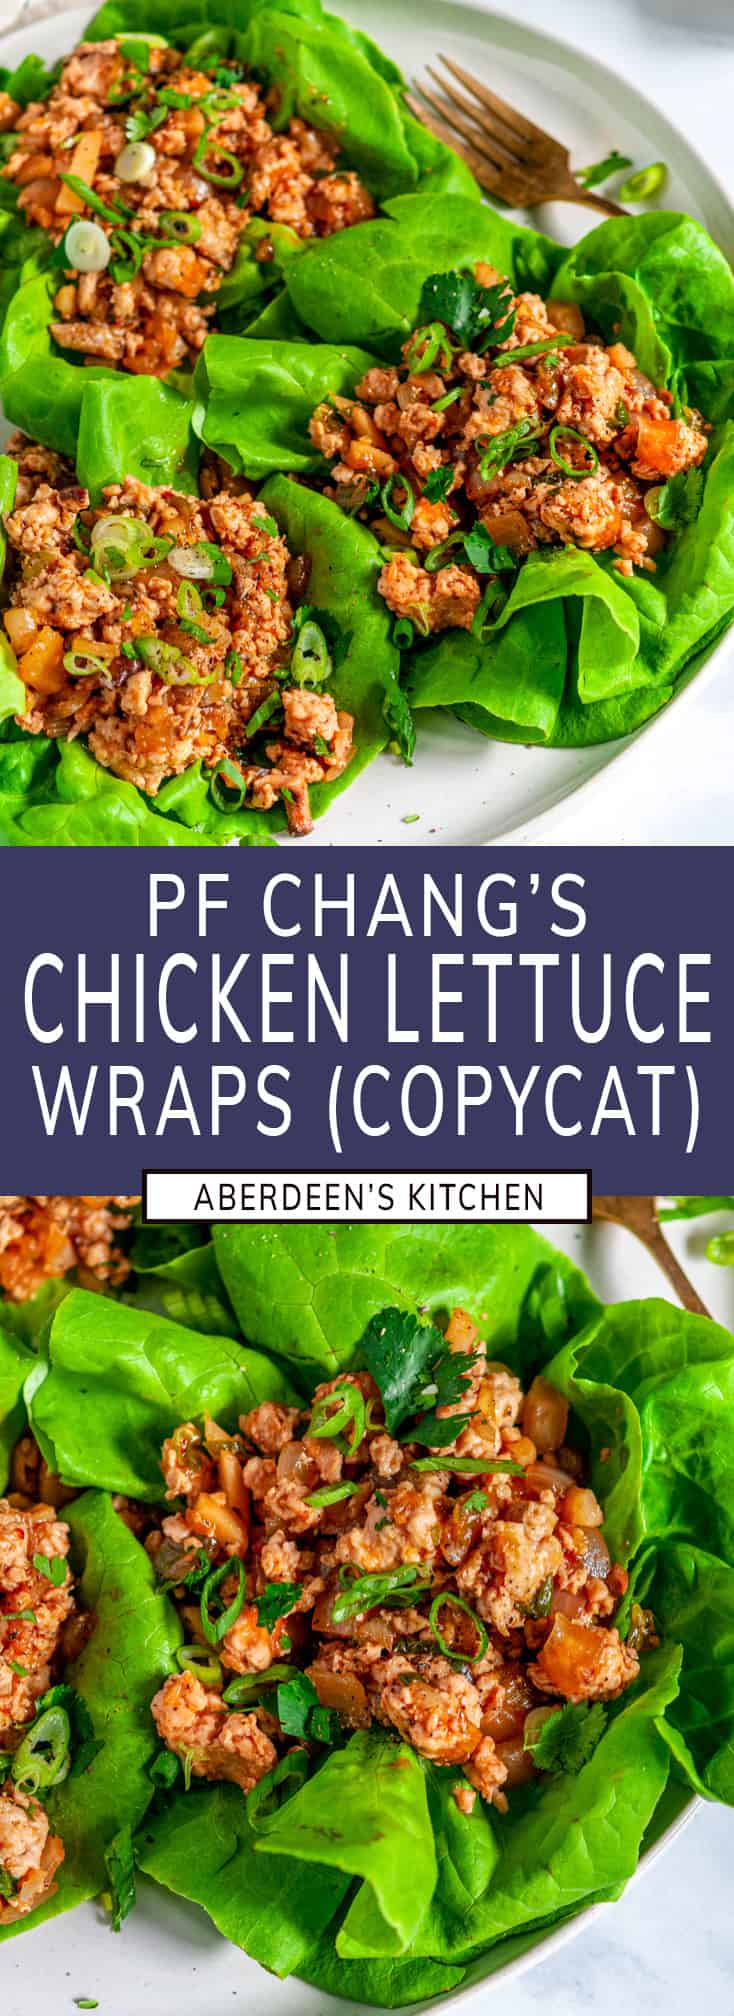 PF Chang's Chicken Lettuce Wraps (Copycat Recipe) - Aberdeen's Kitchen